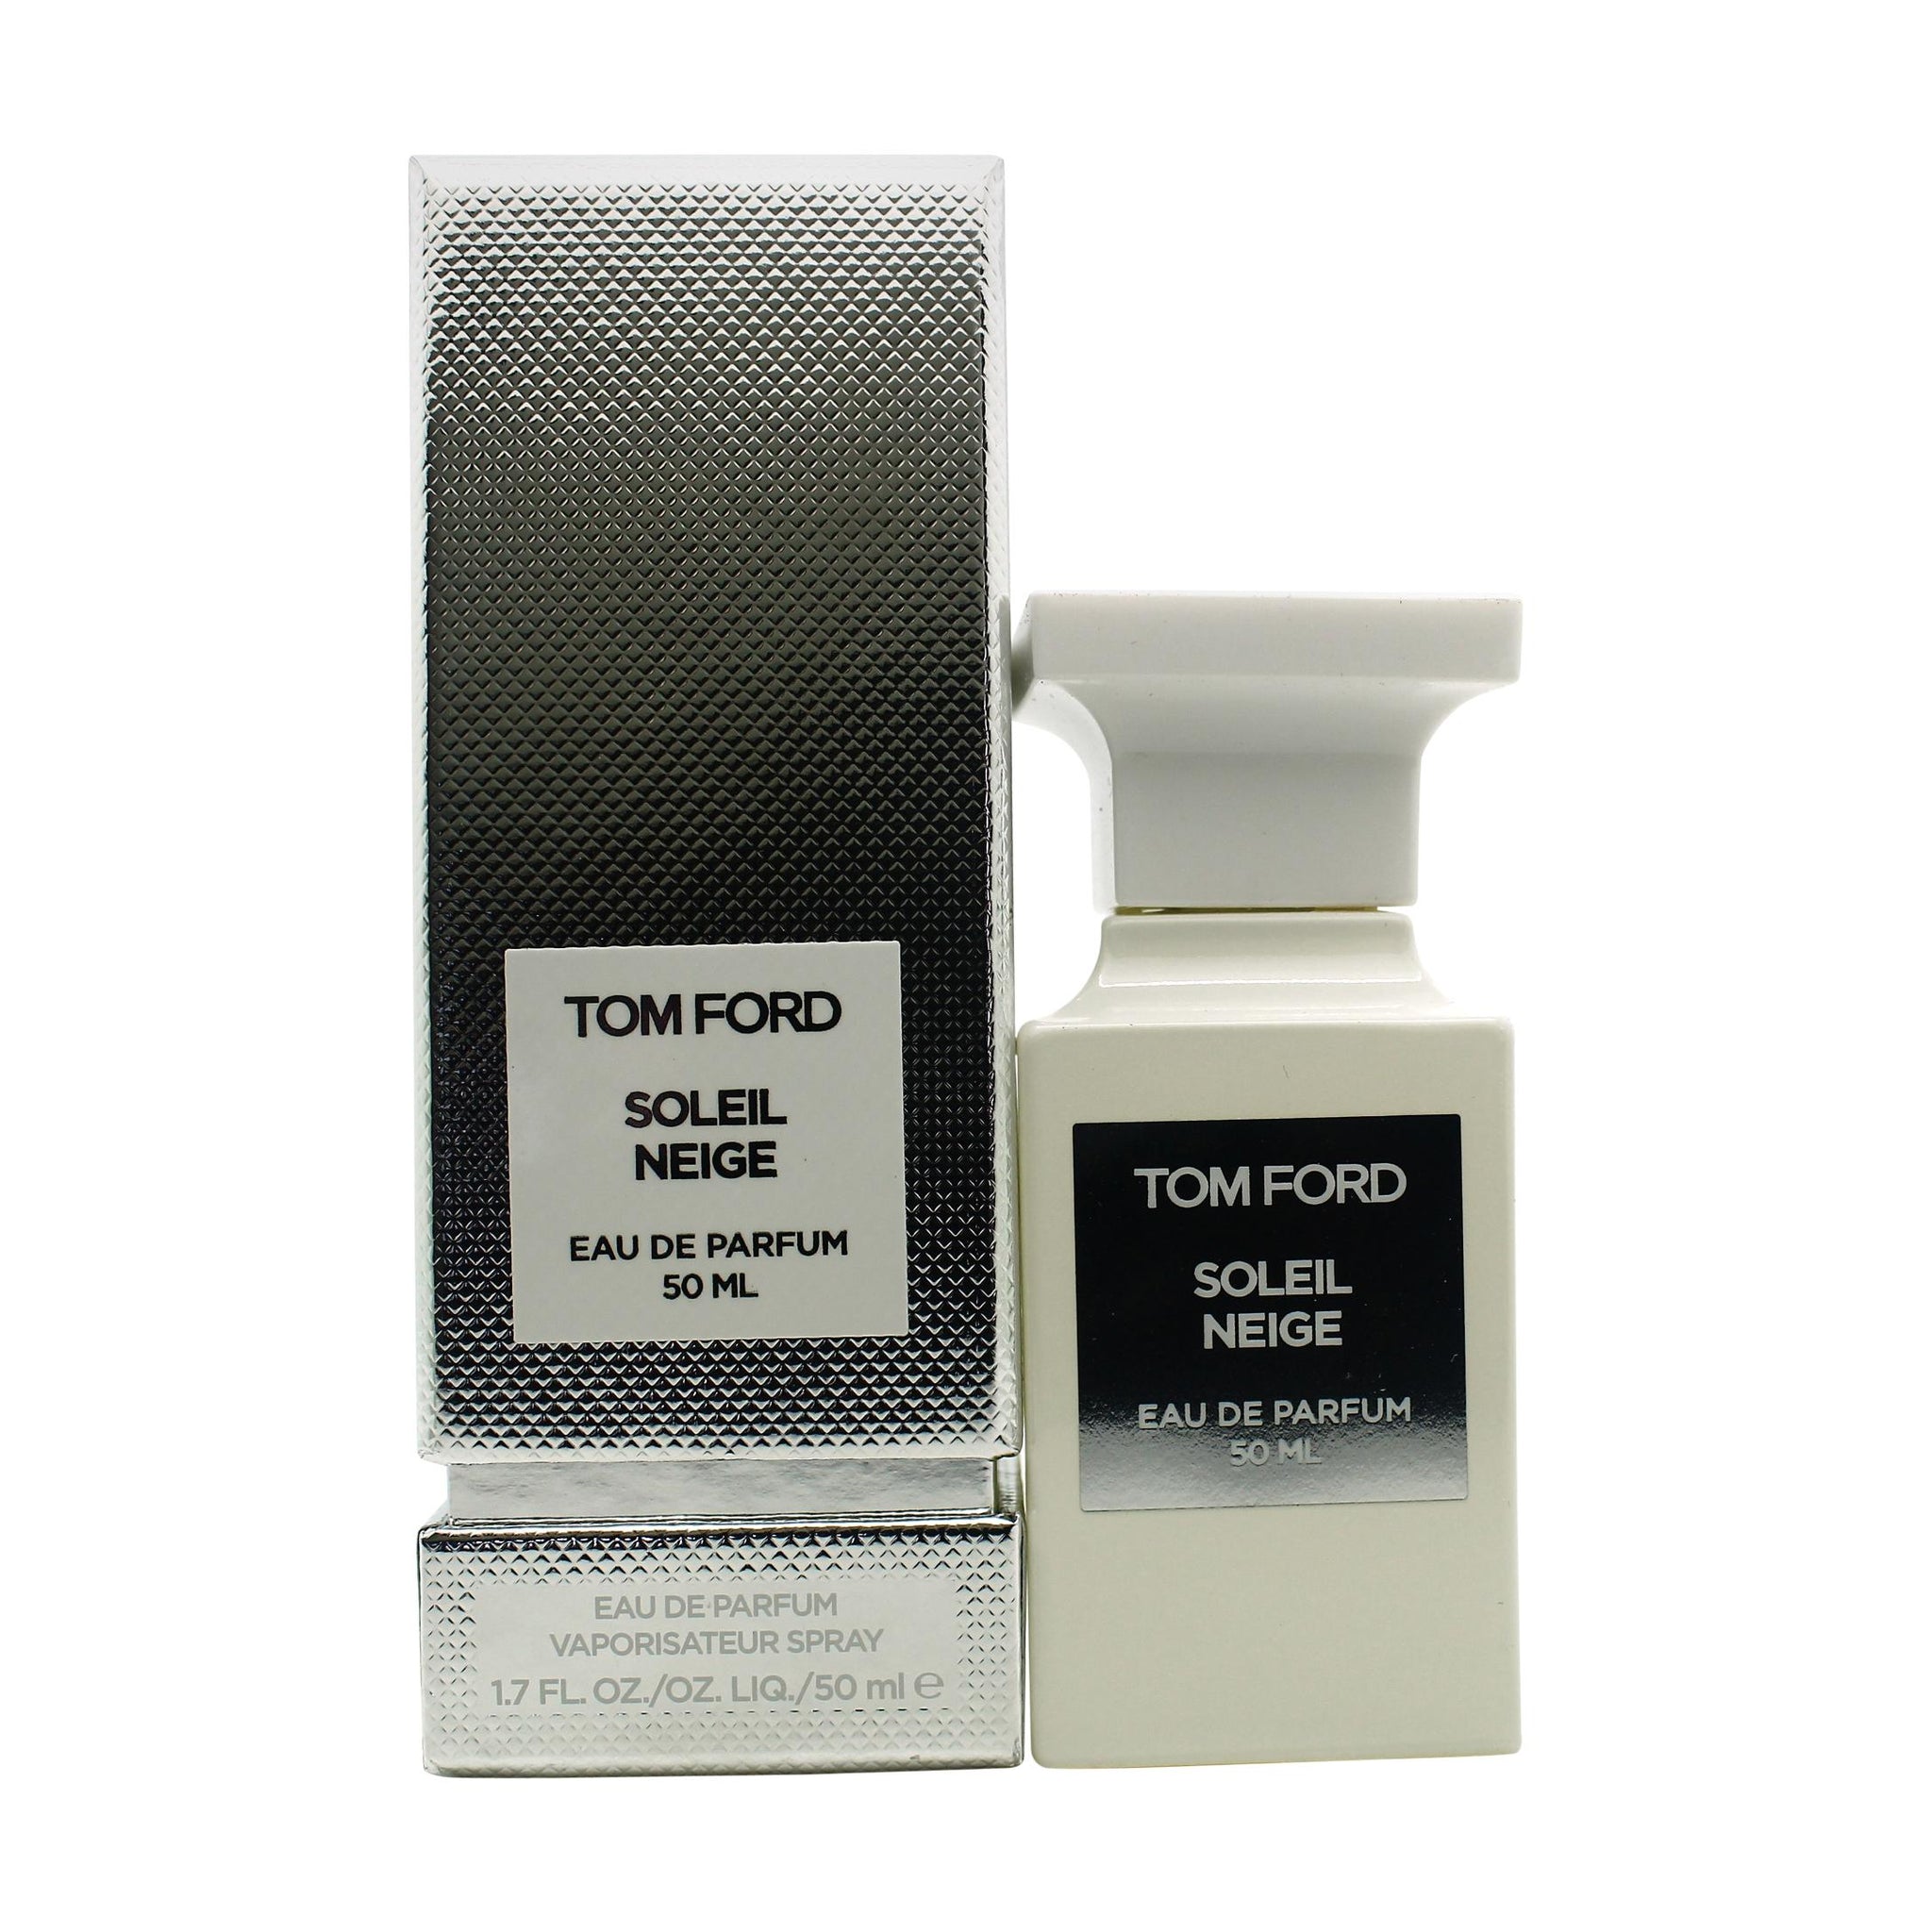 Tom Ford Soleil Neige Eau de Parfum 50ml Spray